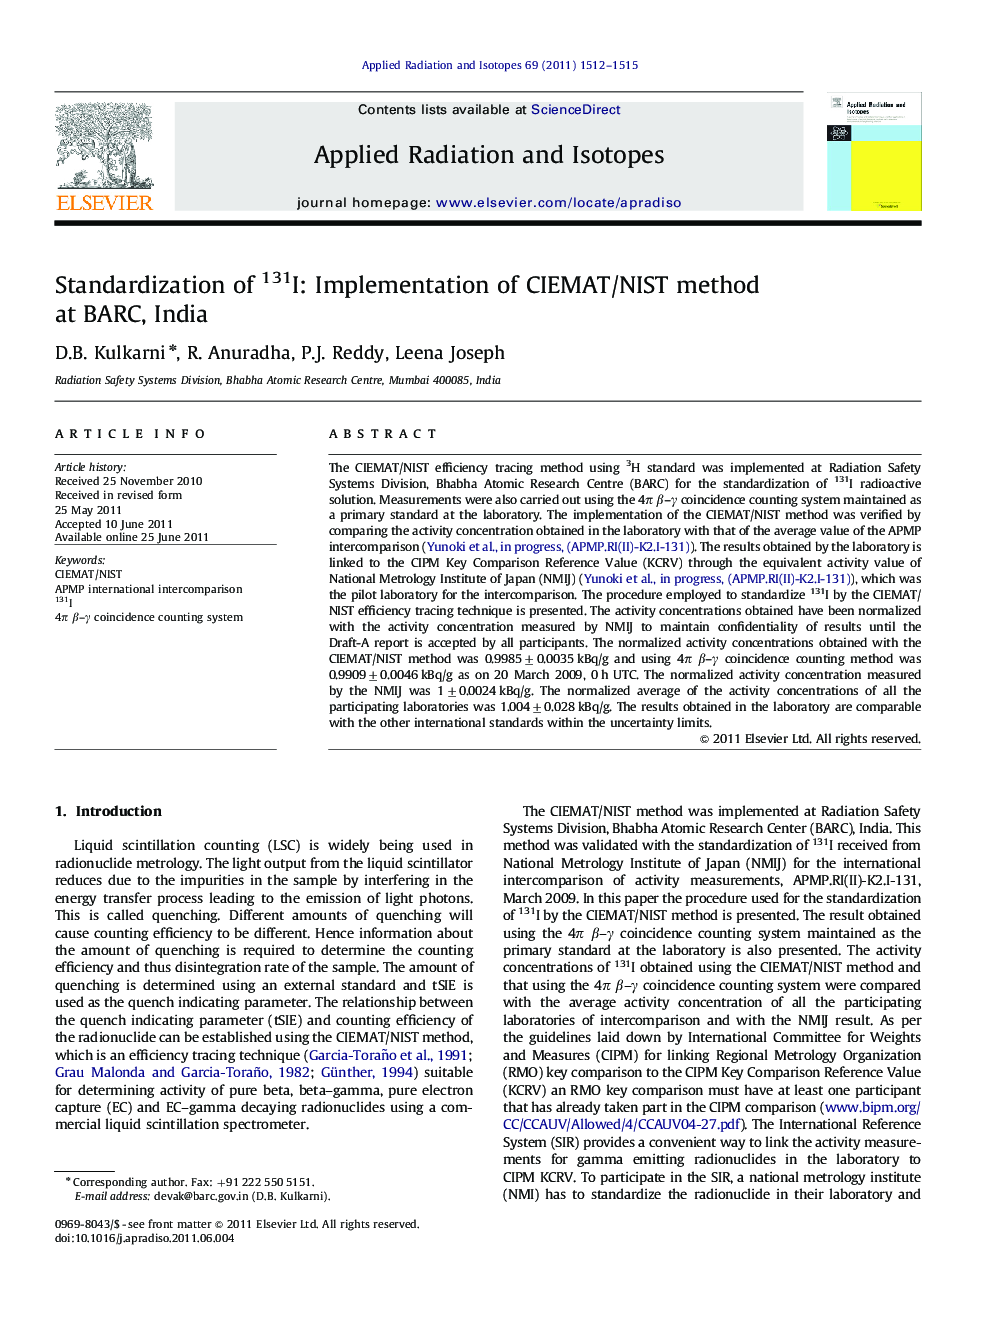 Standardization of 131I: Implementation of CIEMAT/NIST method at BARC, India